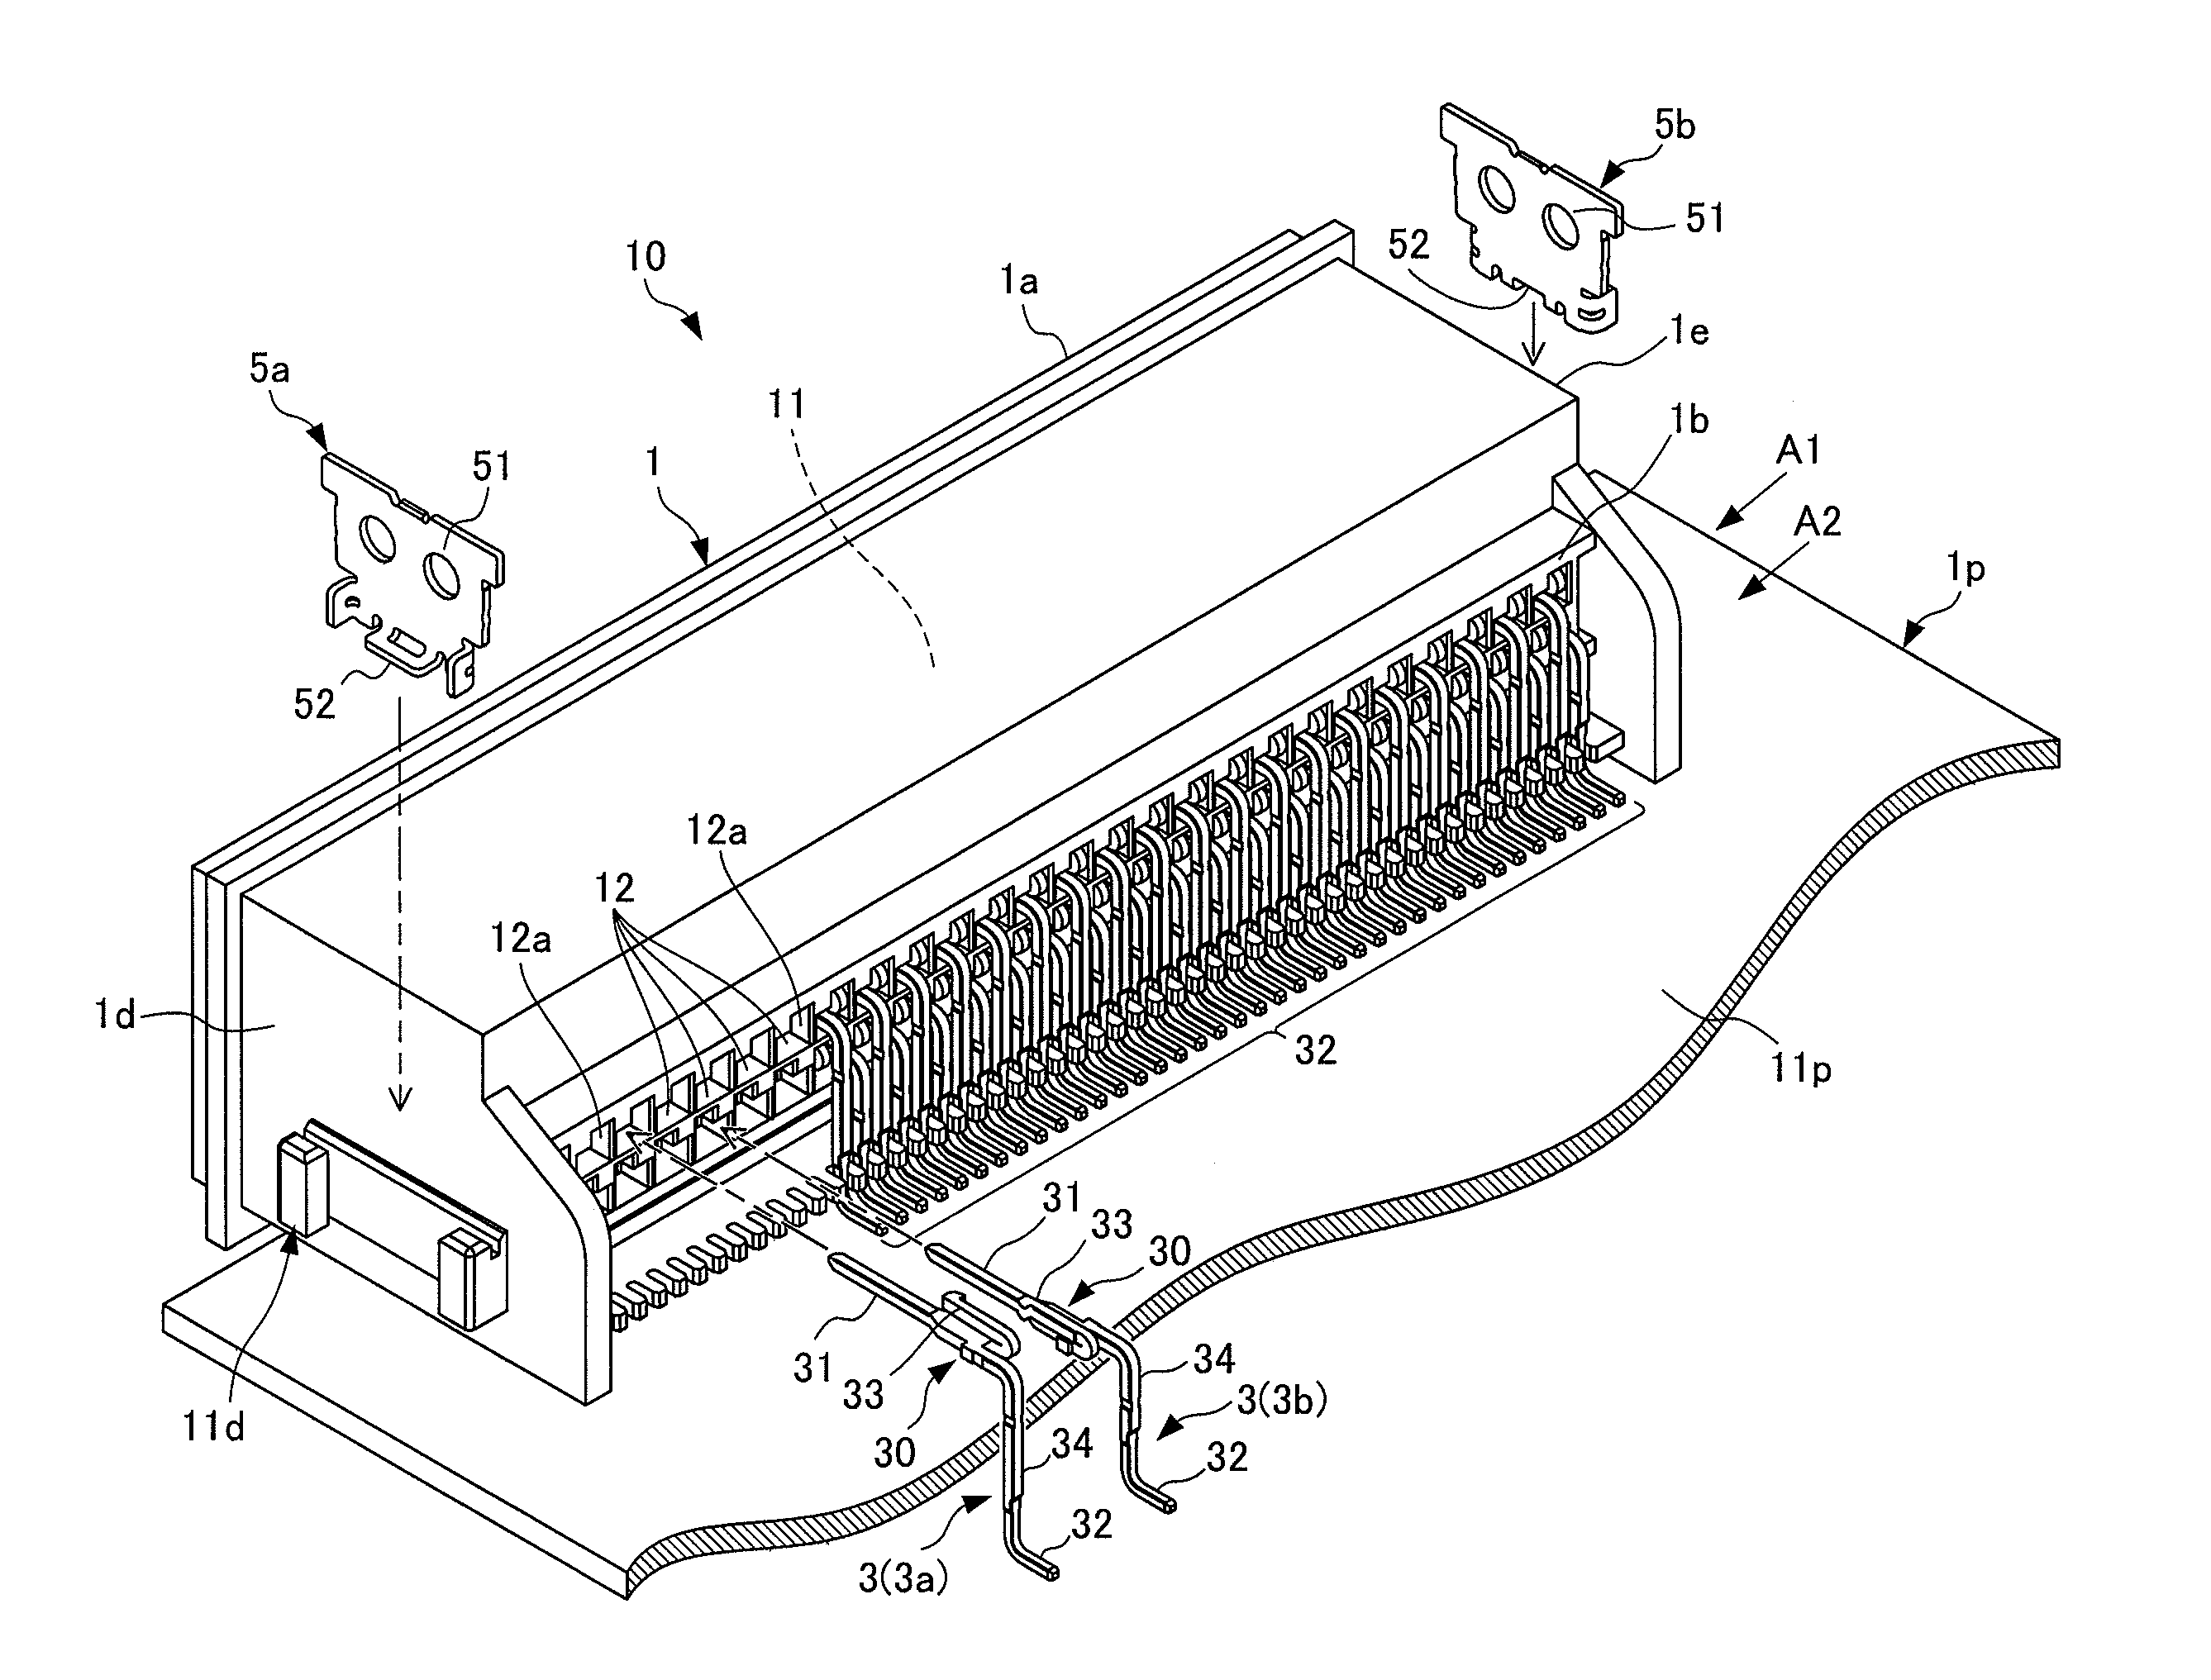 Printed circuit board connector